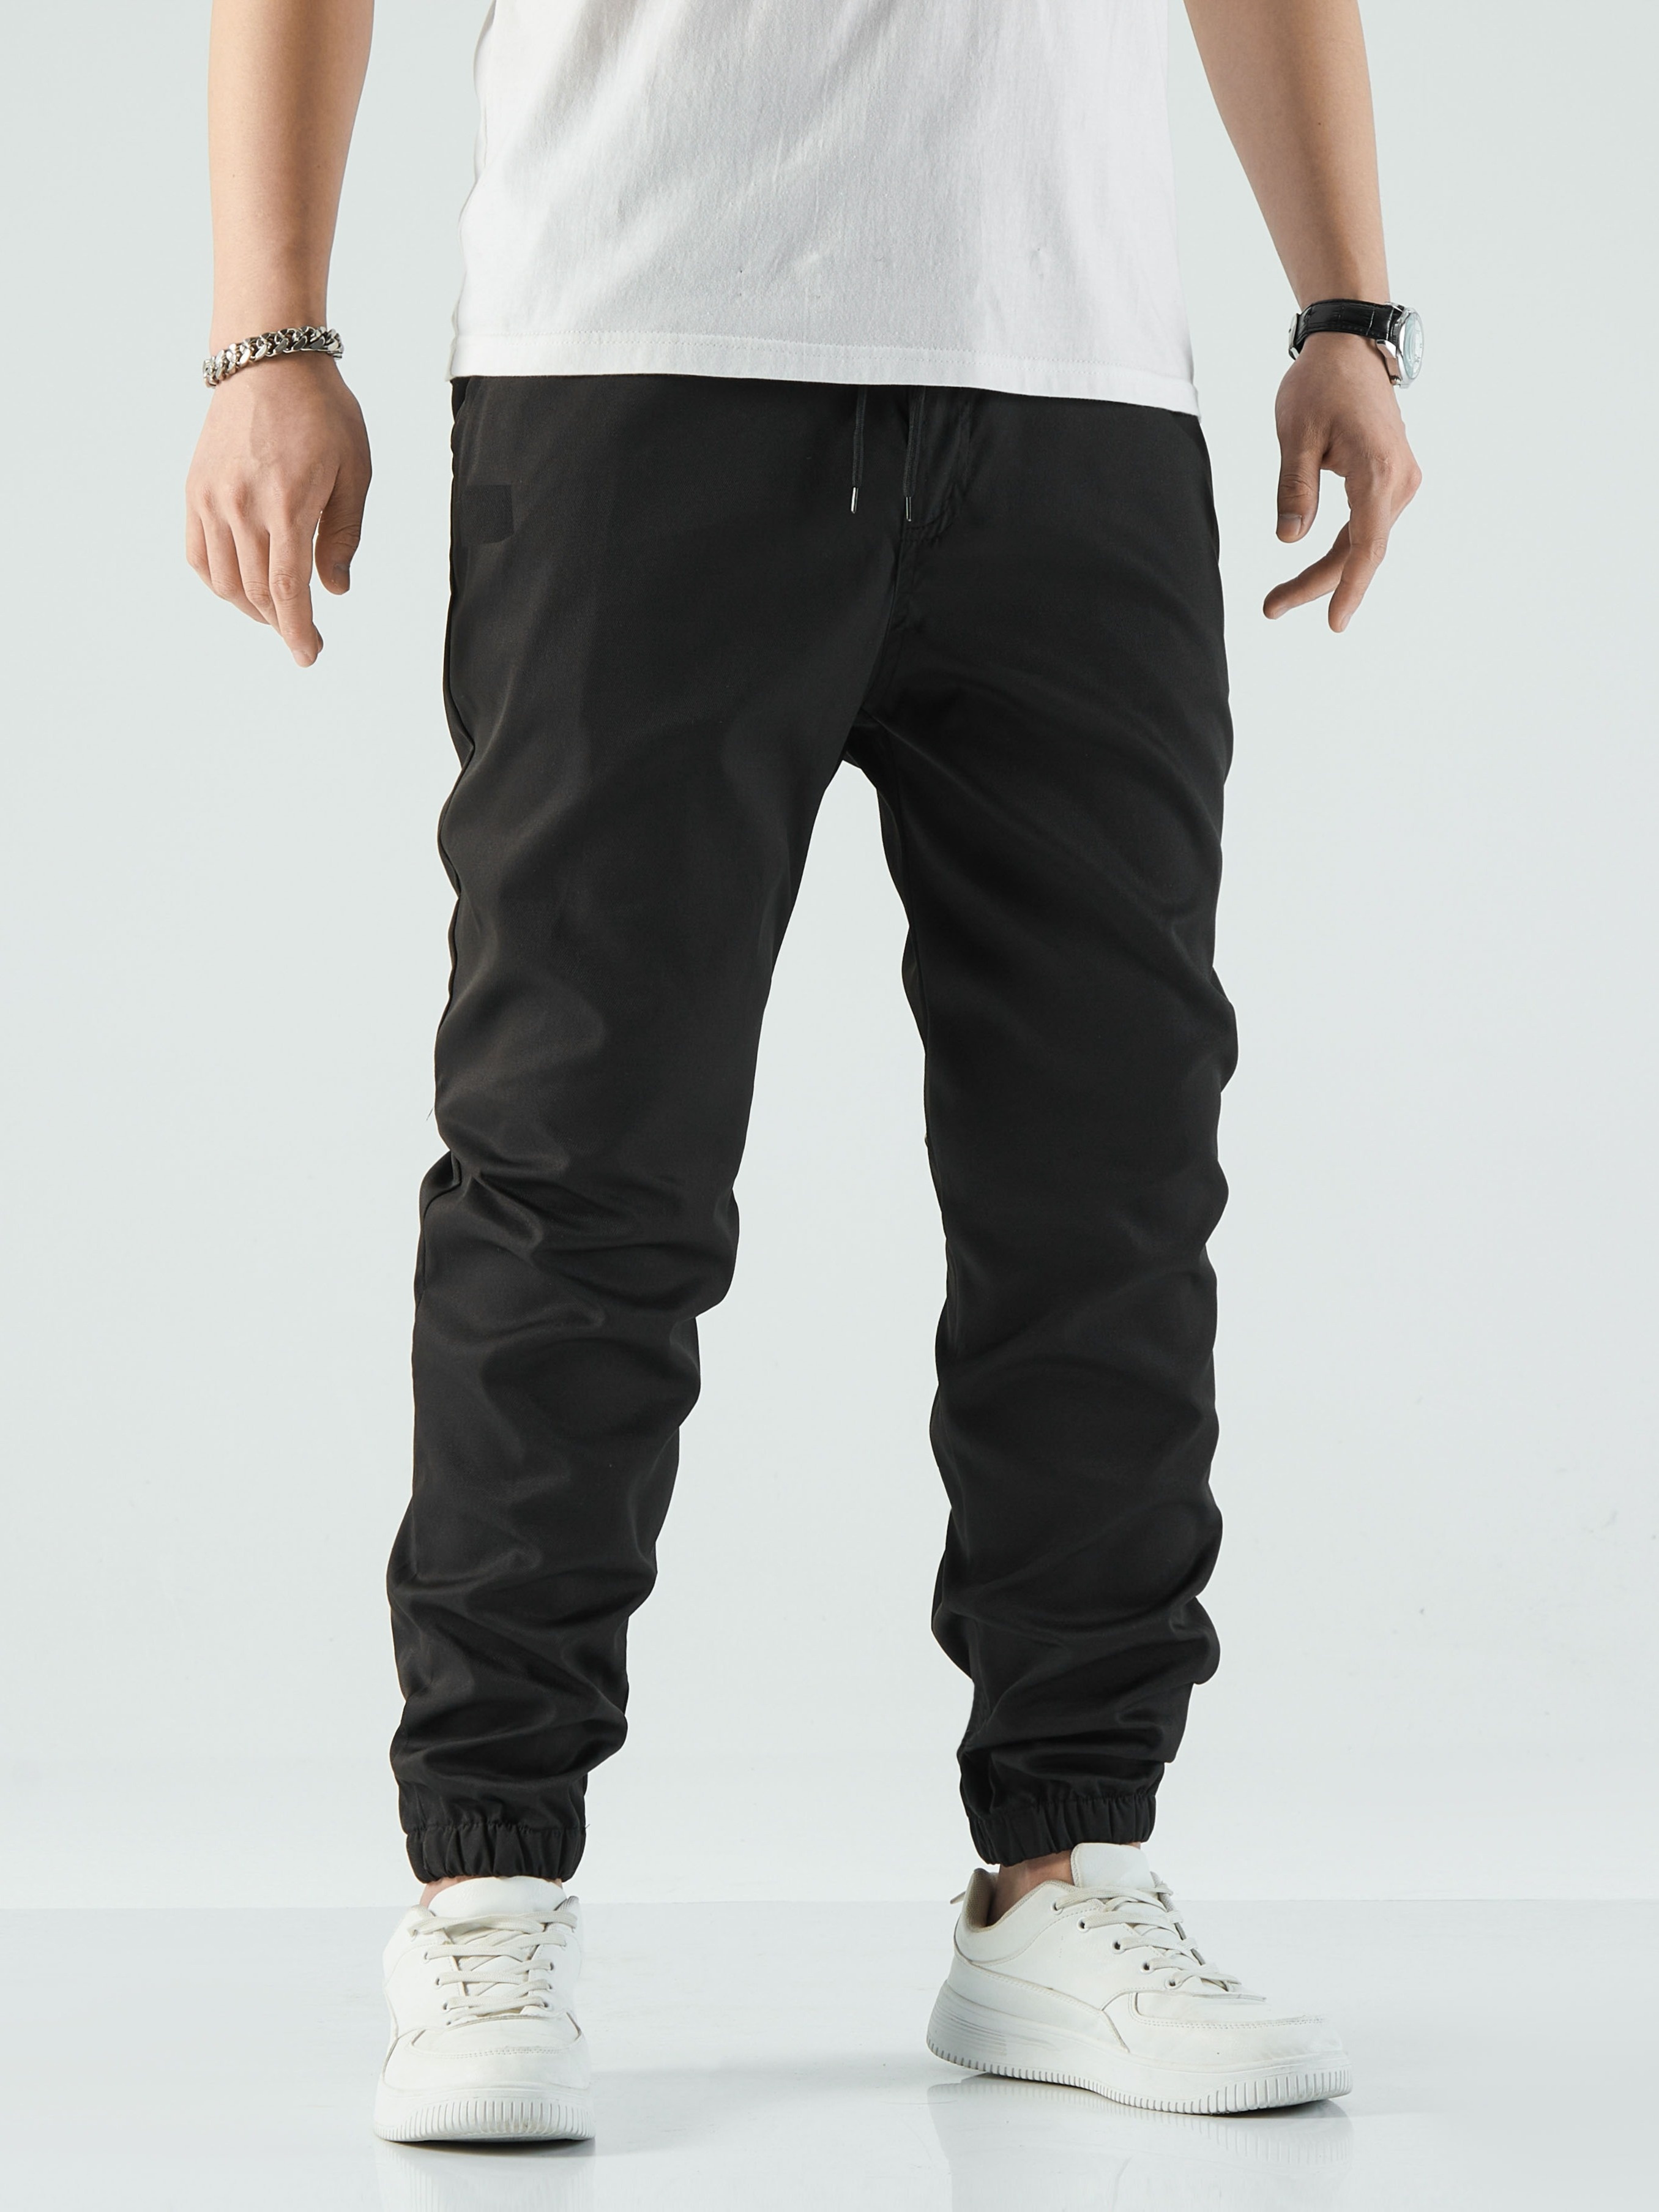 Aeropostale Joggers Pants Men's Black XL Sweatpants,Drawstring